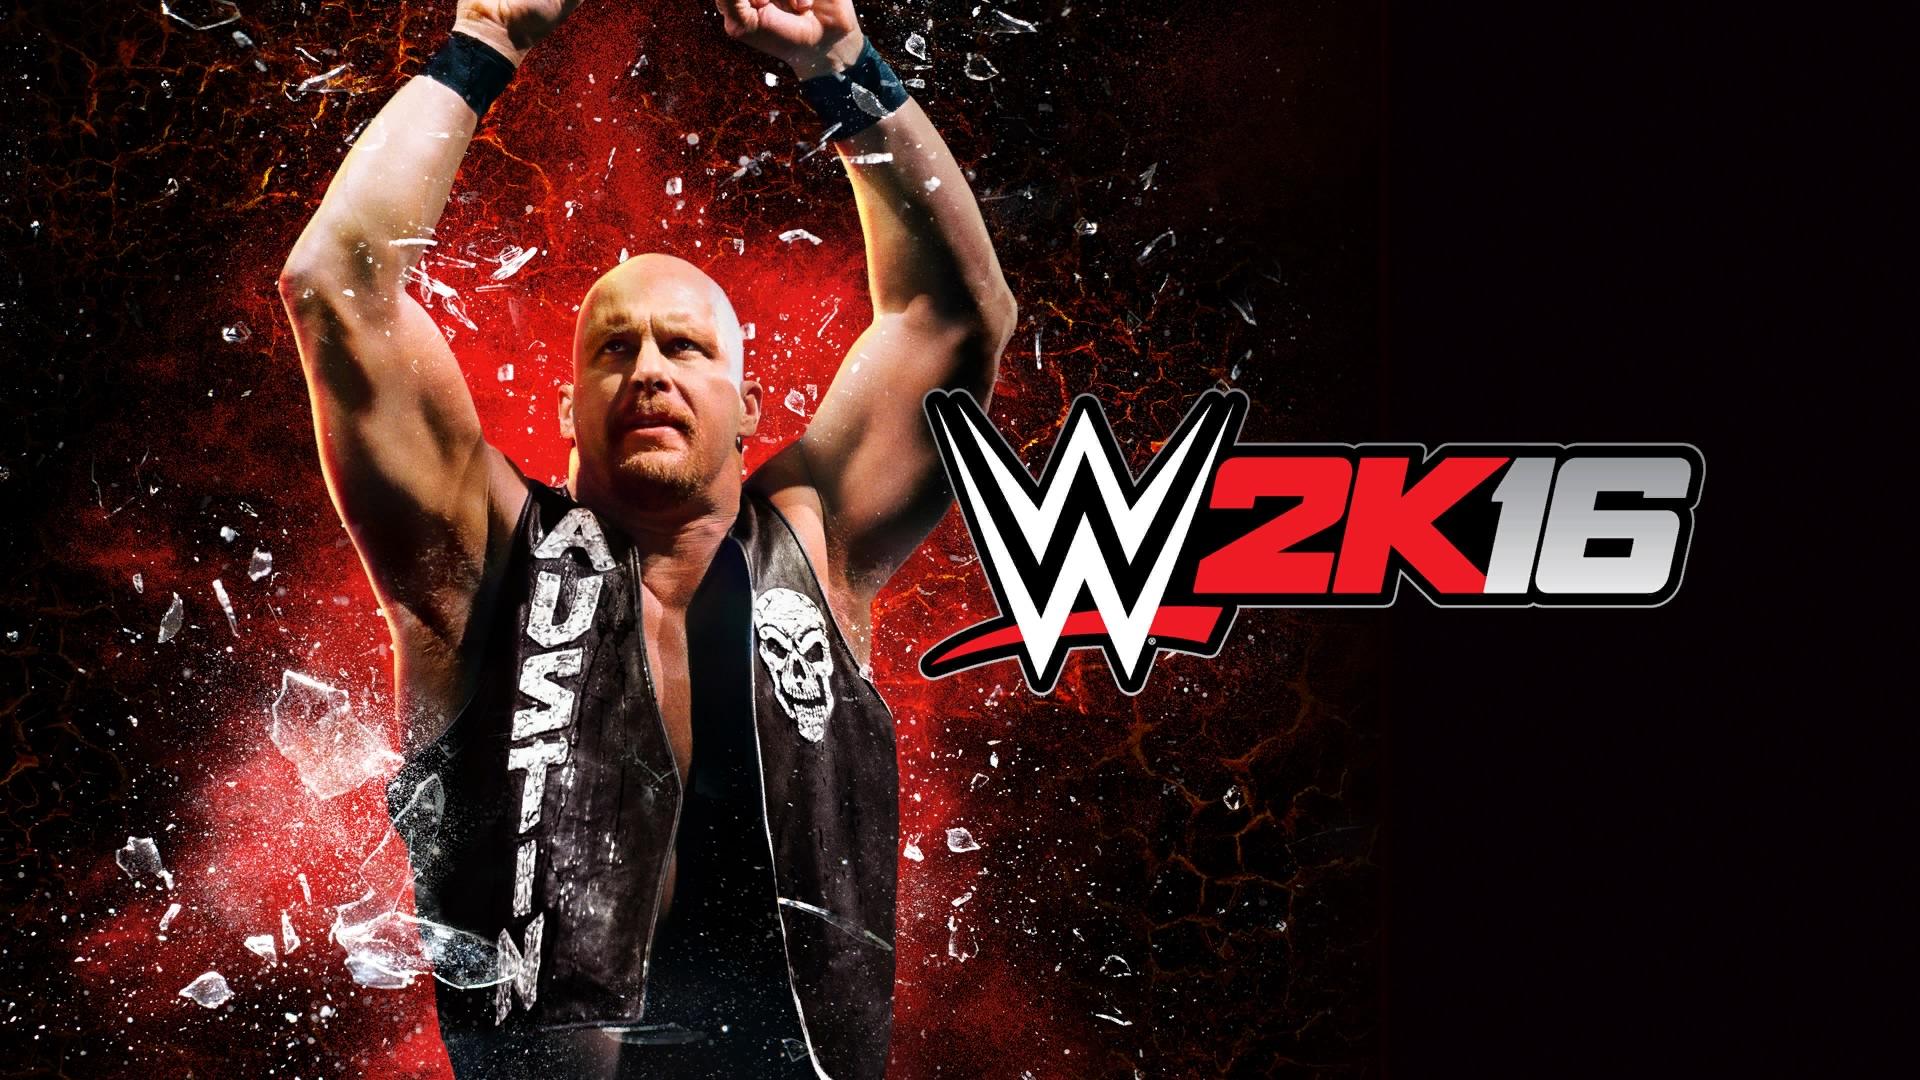 WWE 2K immagini WWE 2K16 PS4 HD wallpaper and background foto